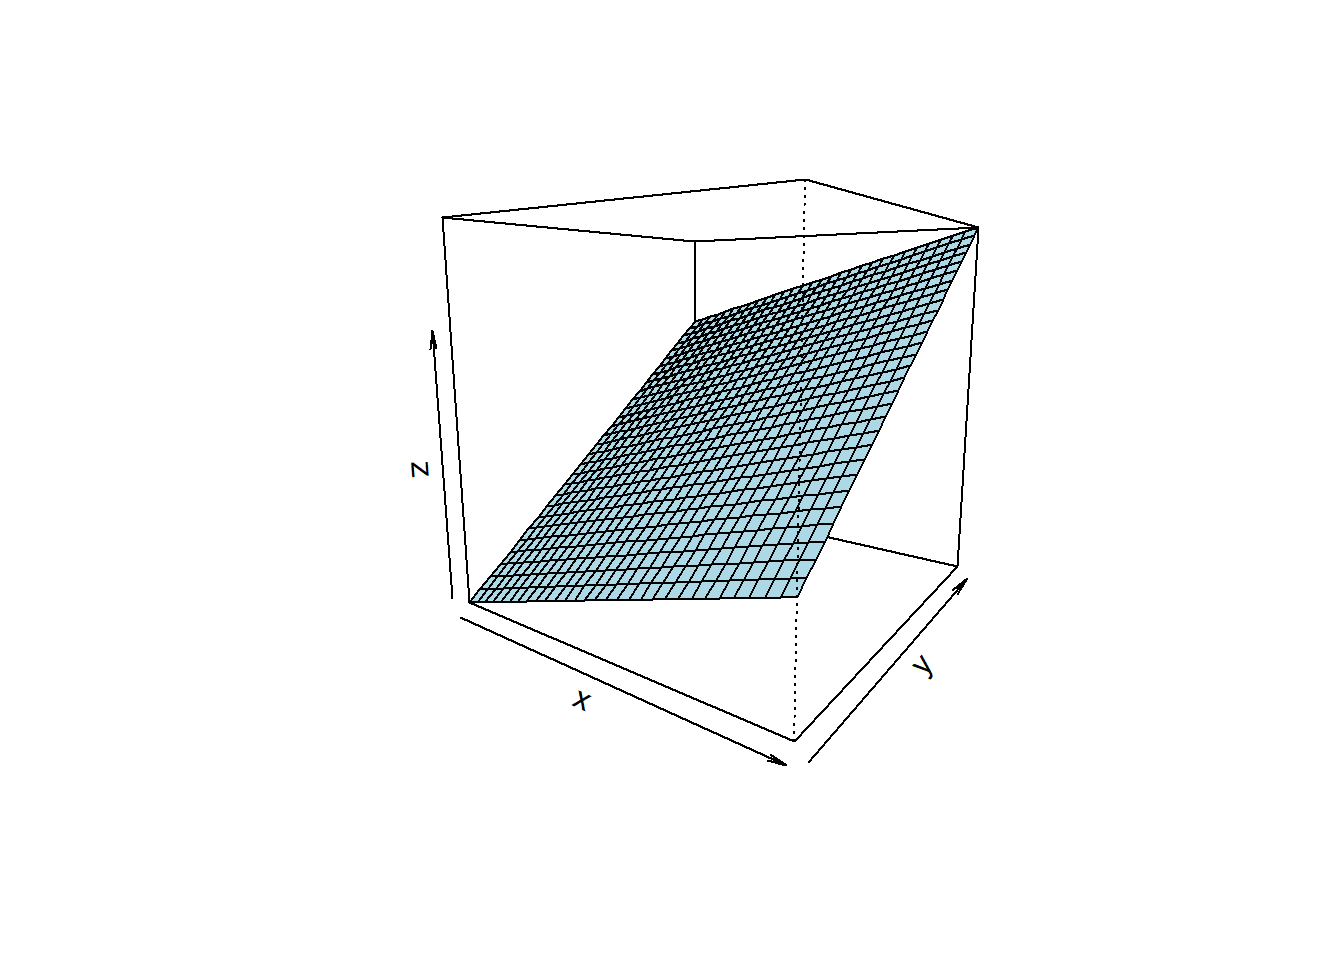 Linear parametric model $z=a_{0} + a_{1} \cdot x + a_{2} \cdot y$.